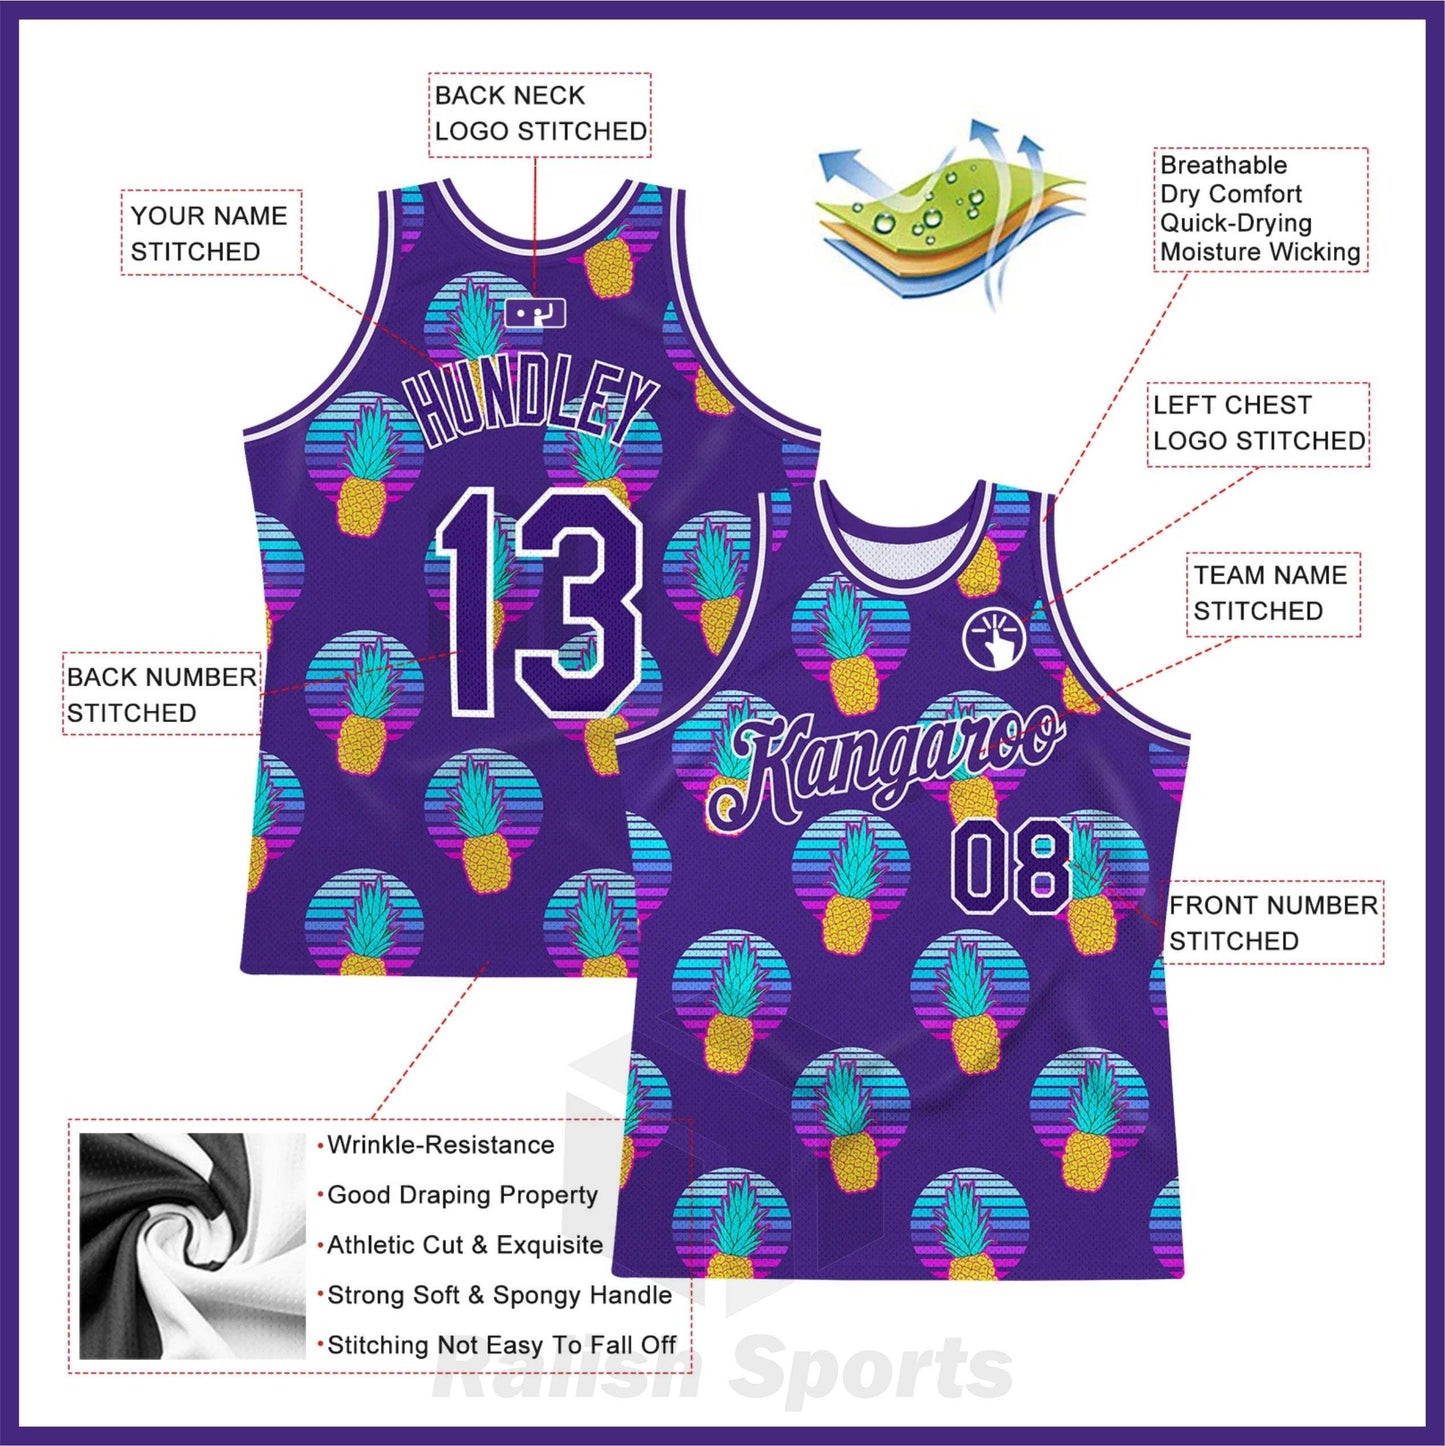 Custom Purple Purple-White 3D Pattern Design Pineapples Authentic Basketball Jersey - Ralish Sports